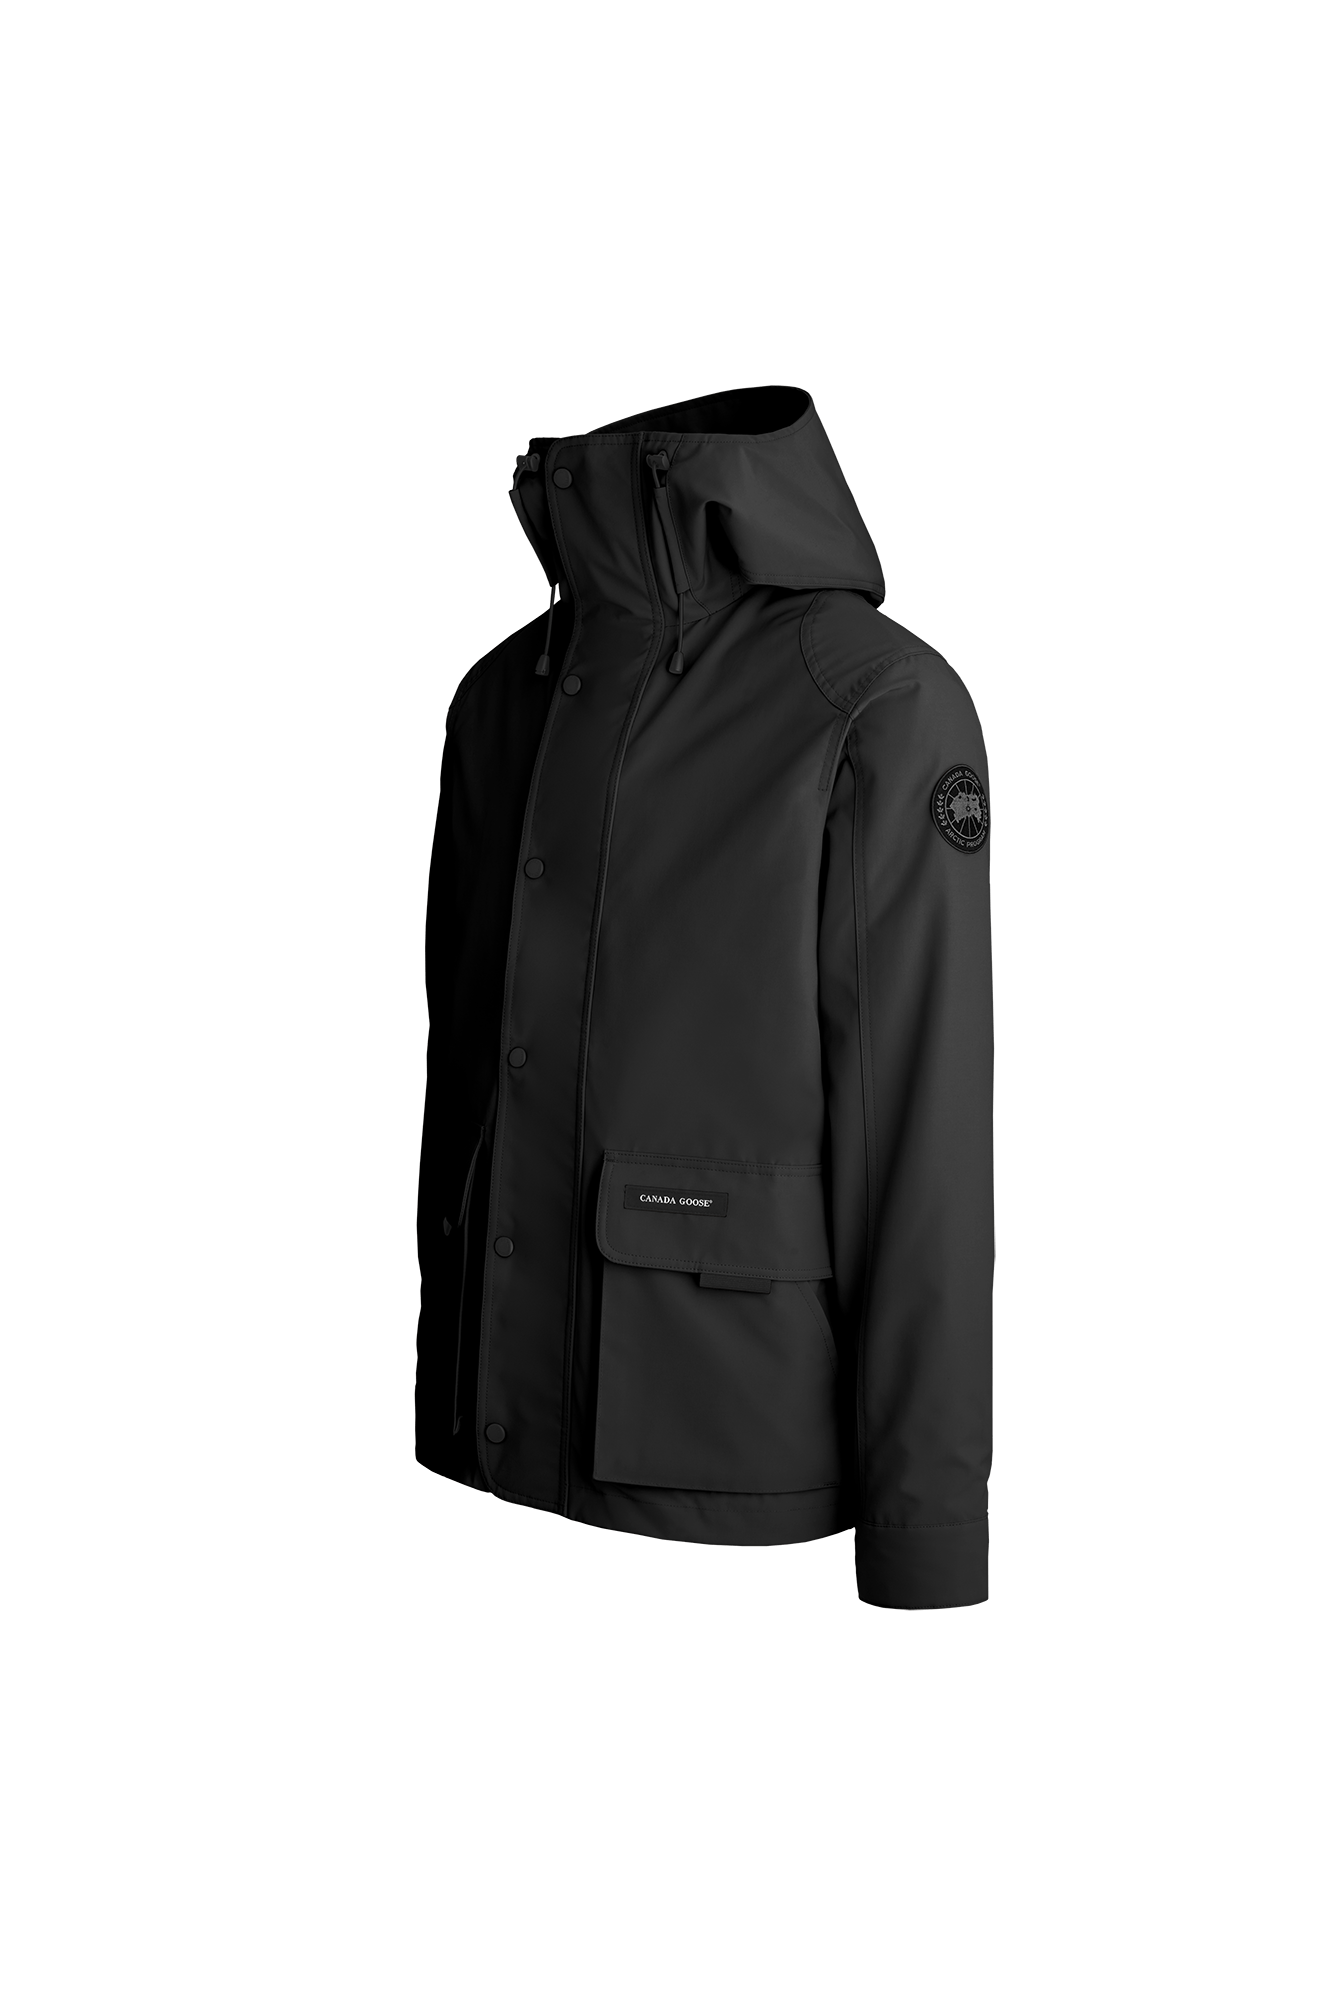 Lockeport Jacket Black Label | Canada Goose®